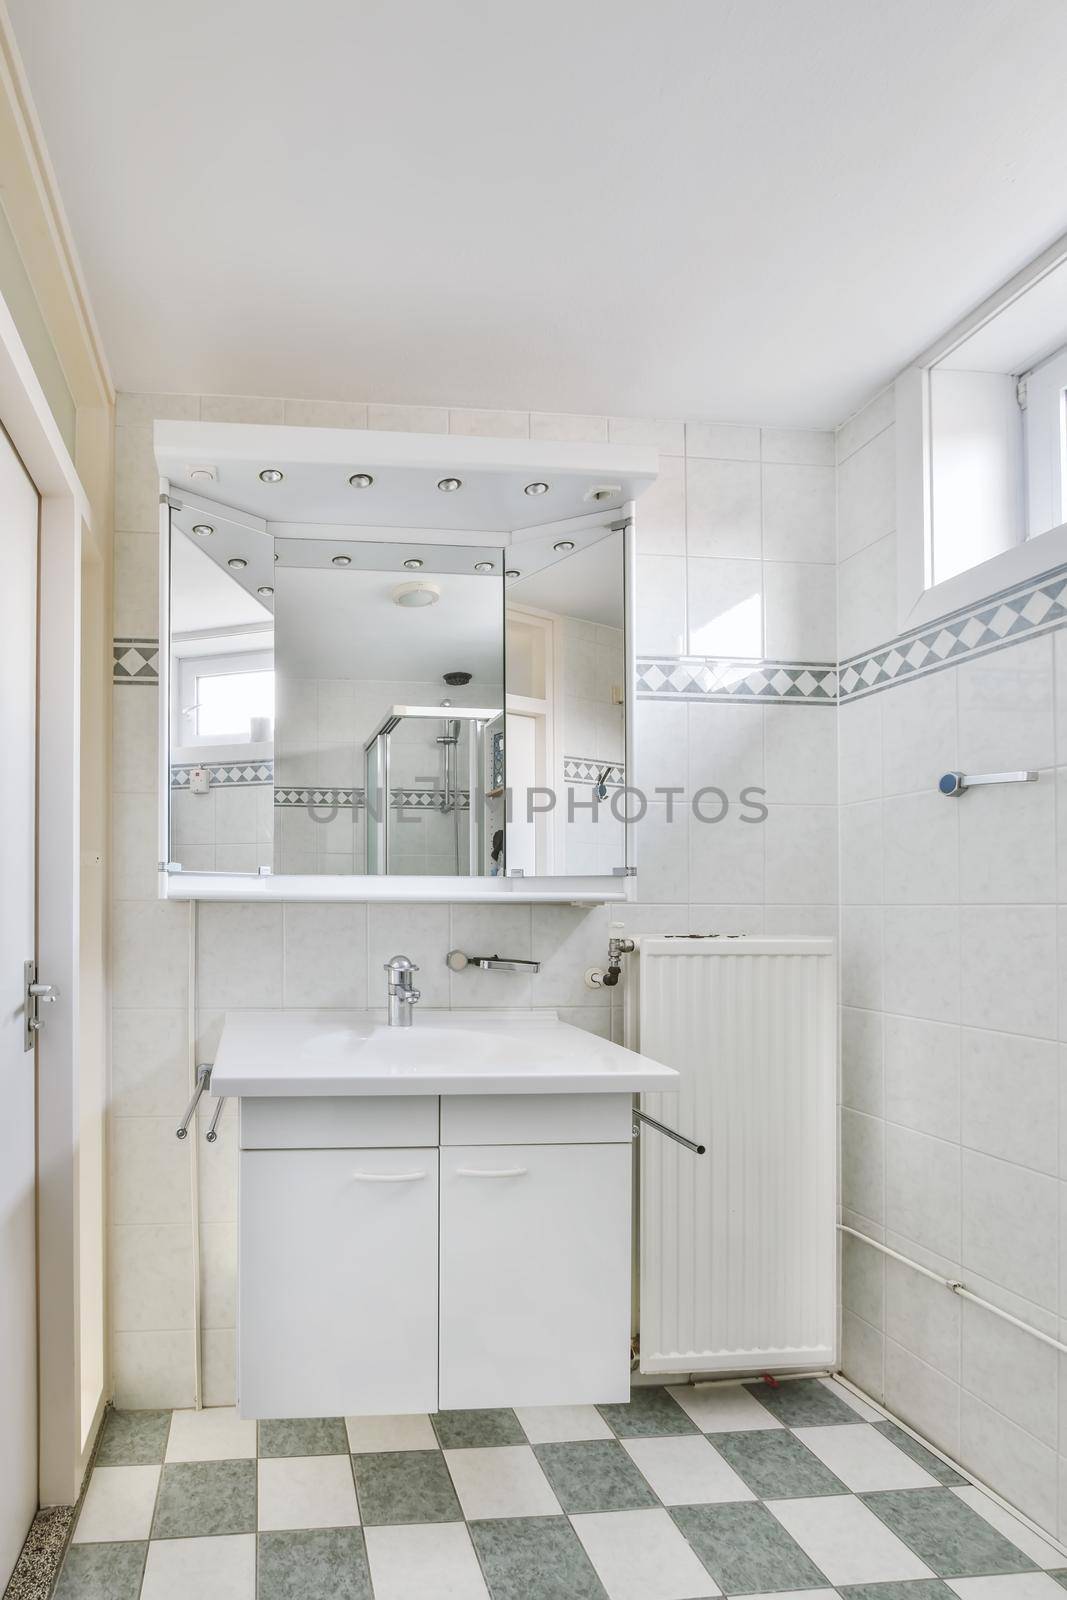 Small bathroom interior with white cabinets, granite countertops and toilet.